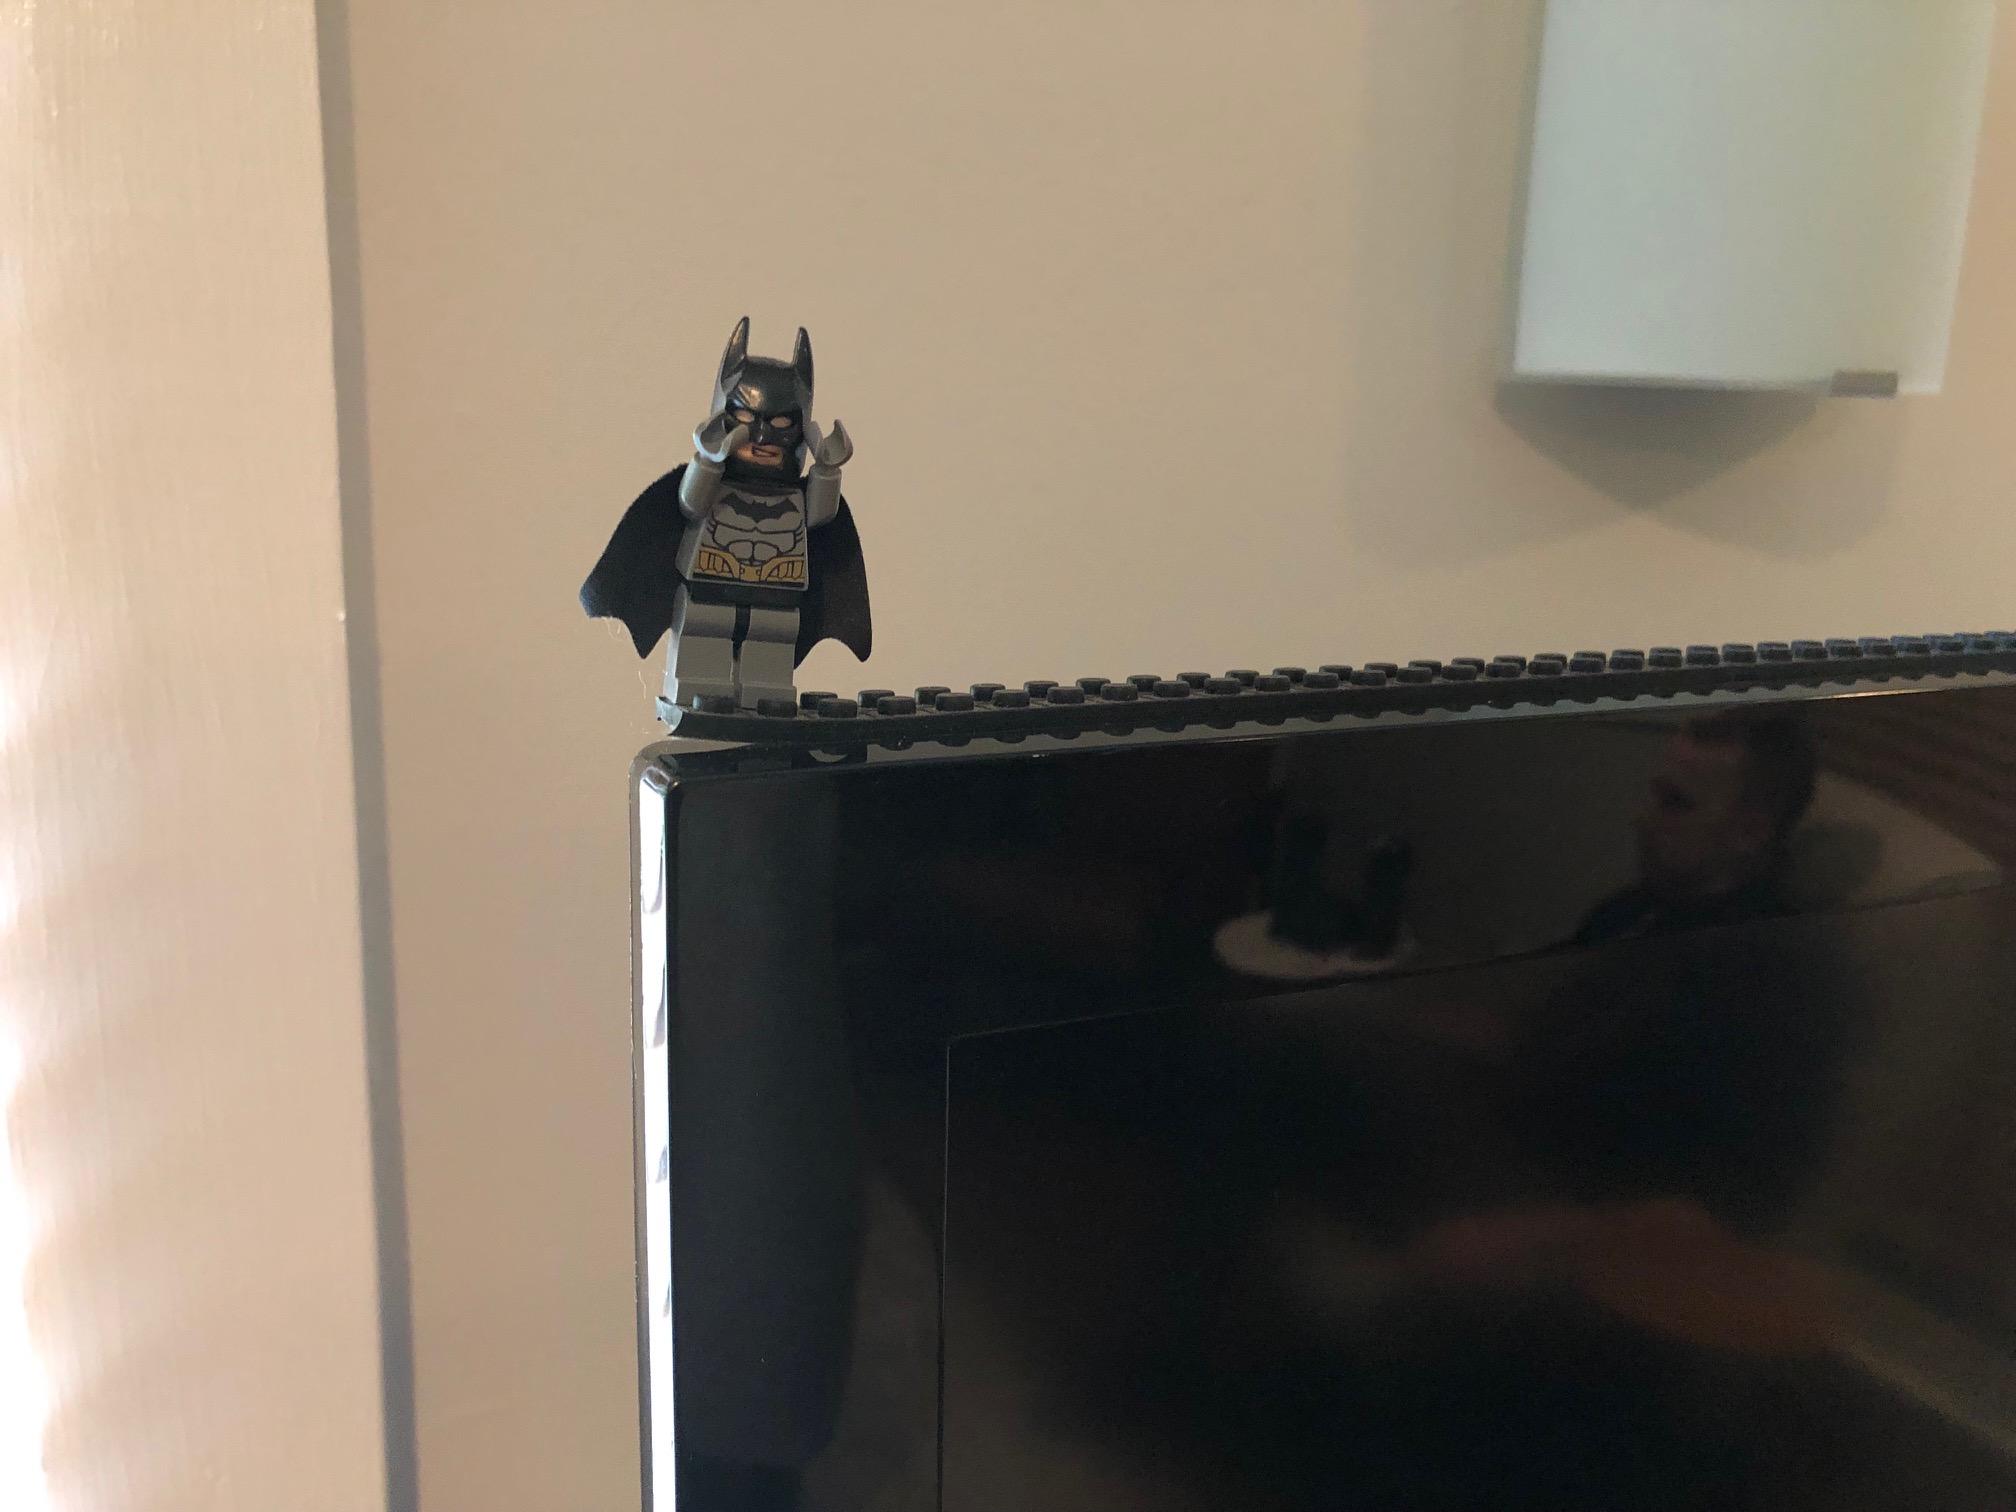 Batman on the TV